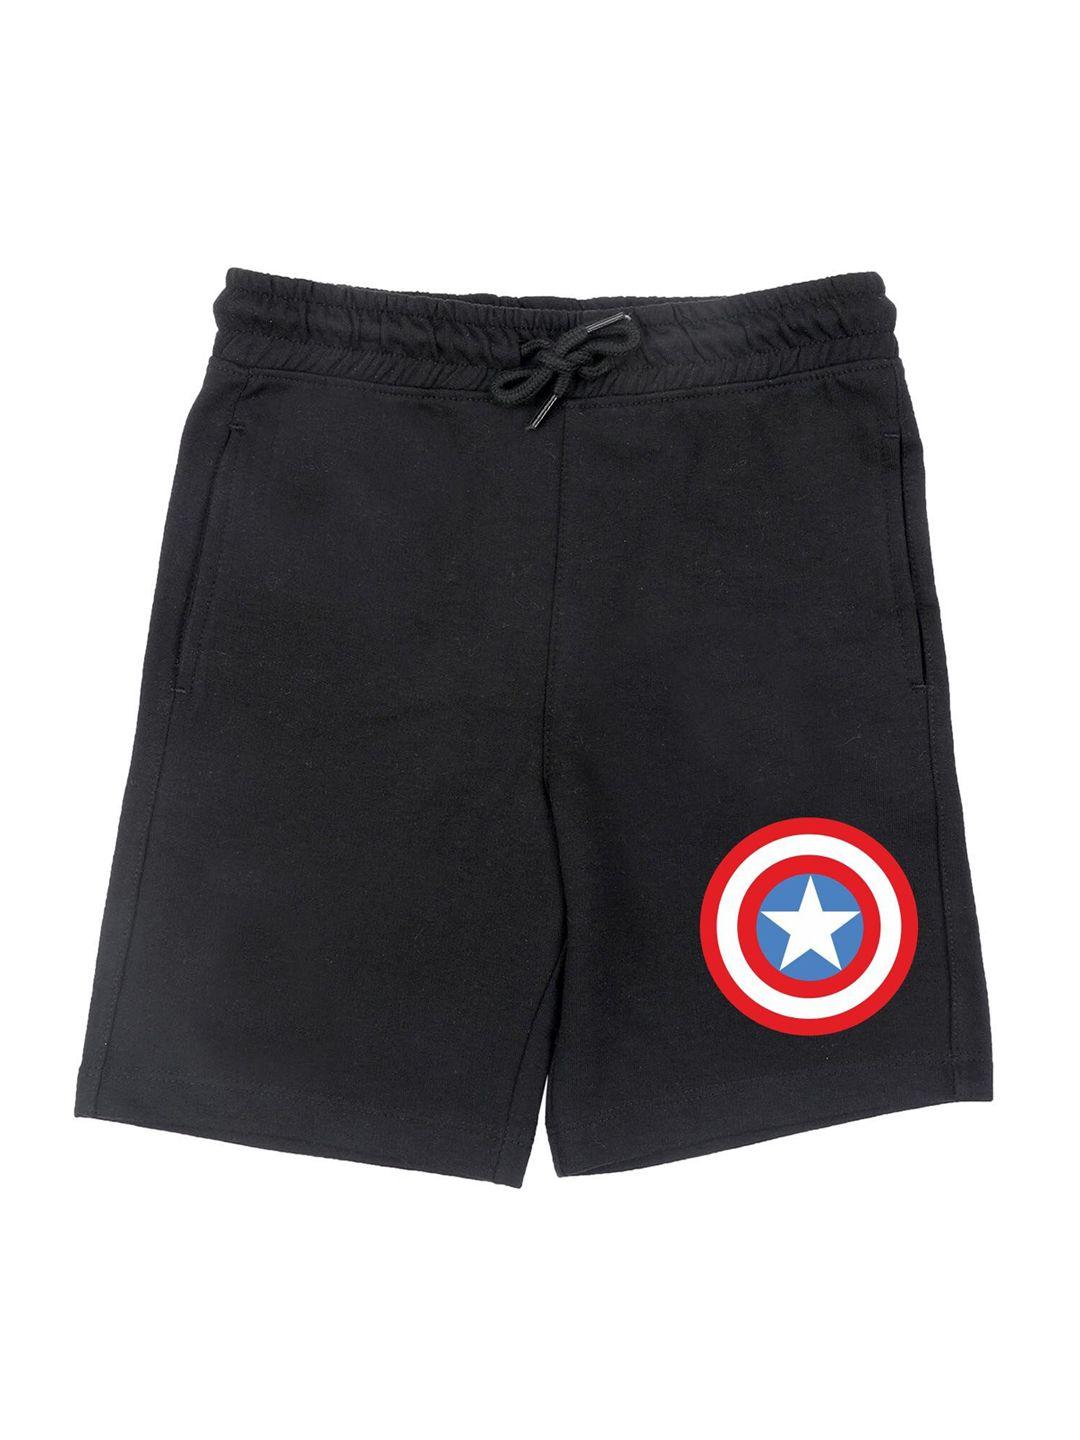 marvel by wear your mind boys black superhero printed captain america shorts